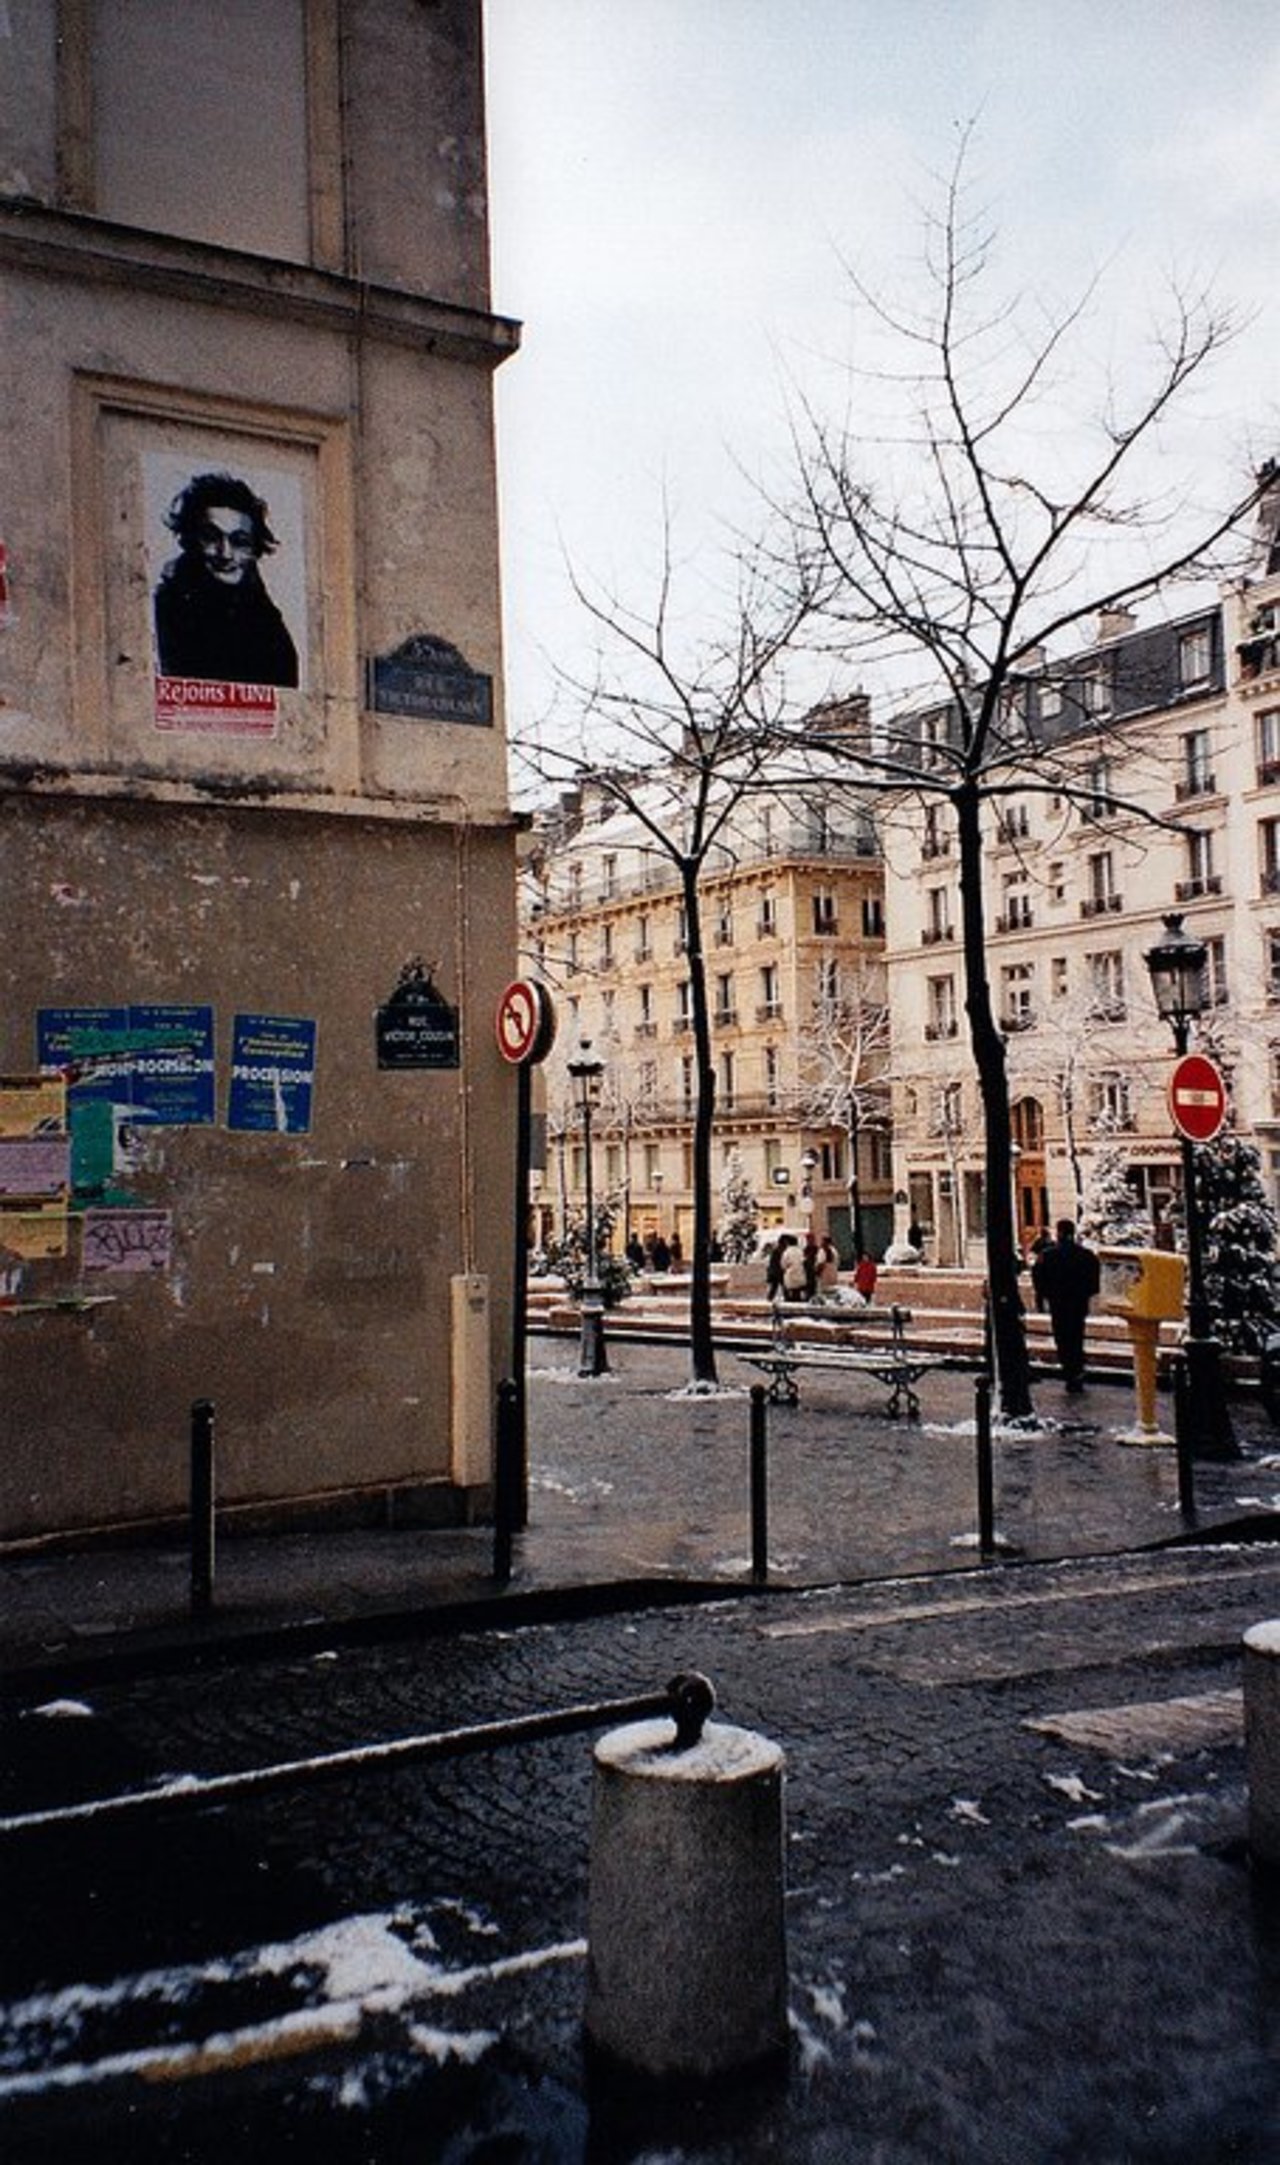 Street Art by Nojnoma in #Paris http://www.urbacolors.com #art #mural #graffiti #streetart https://t.co/8G6HO3CdQo